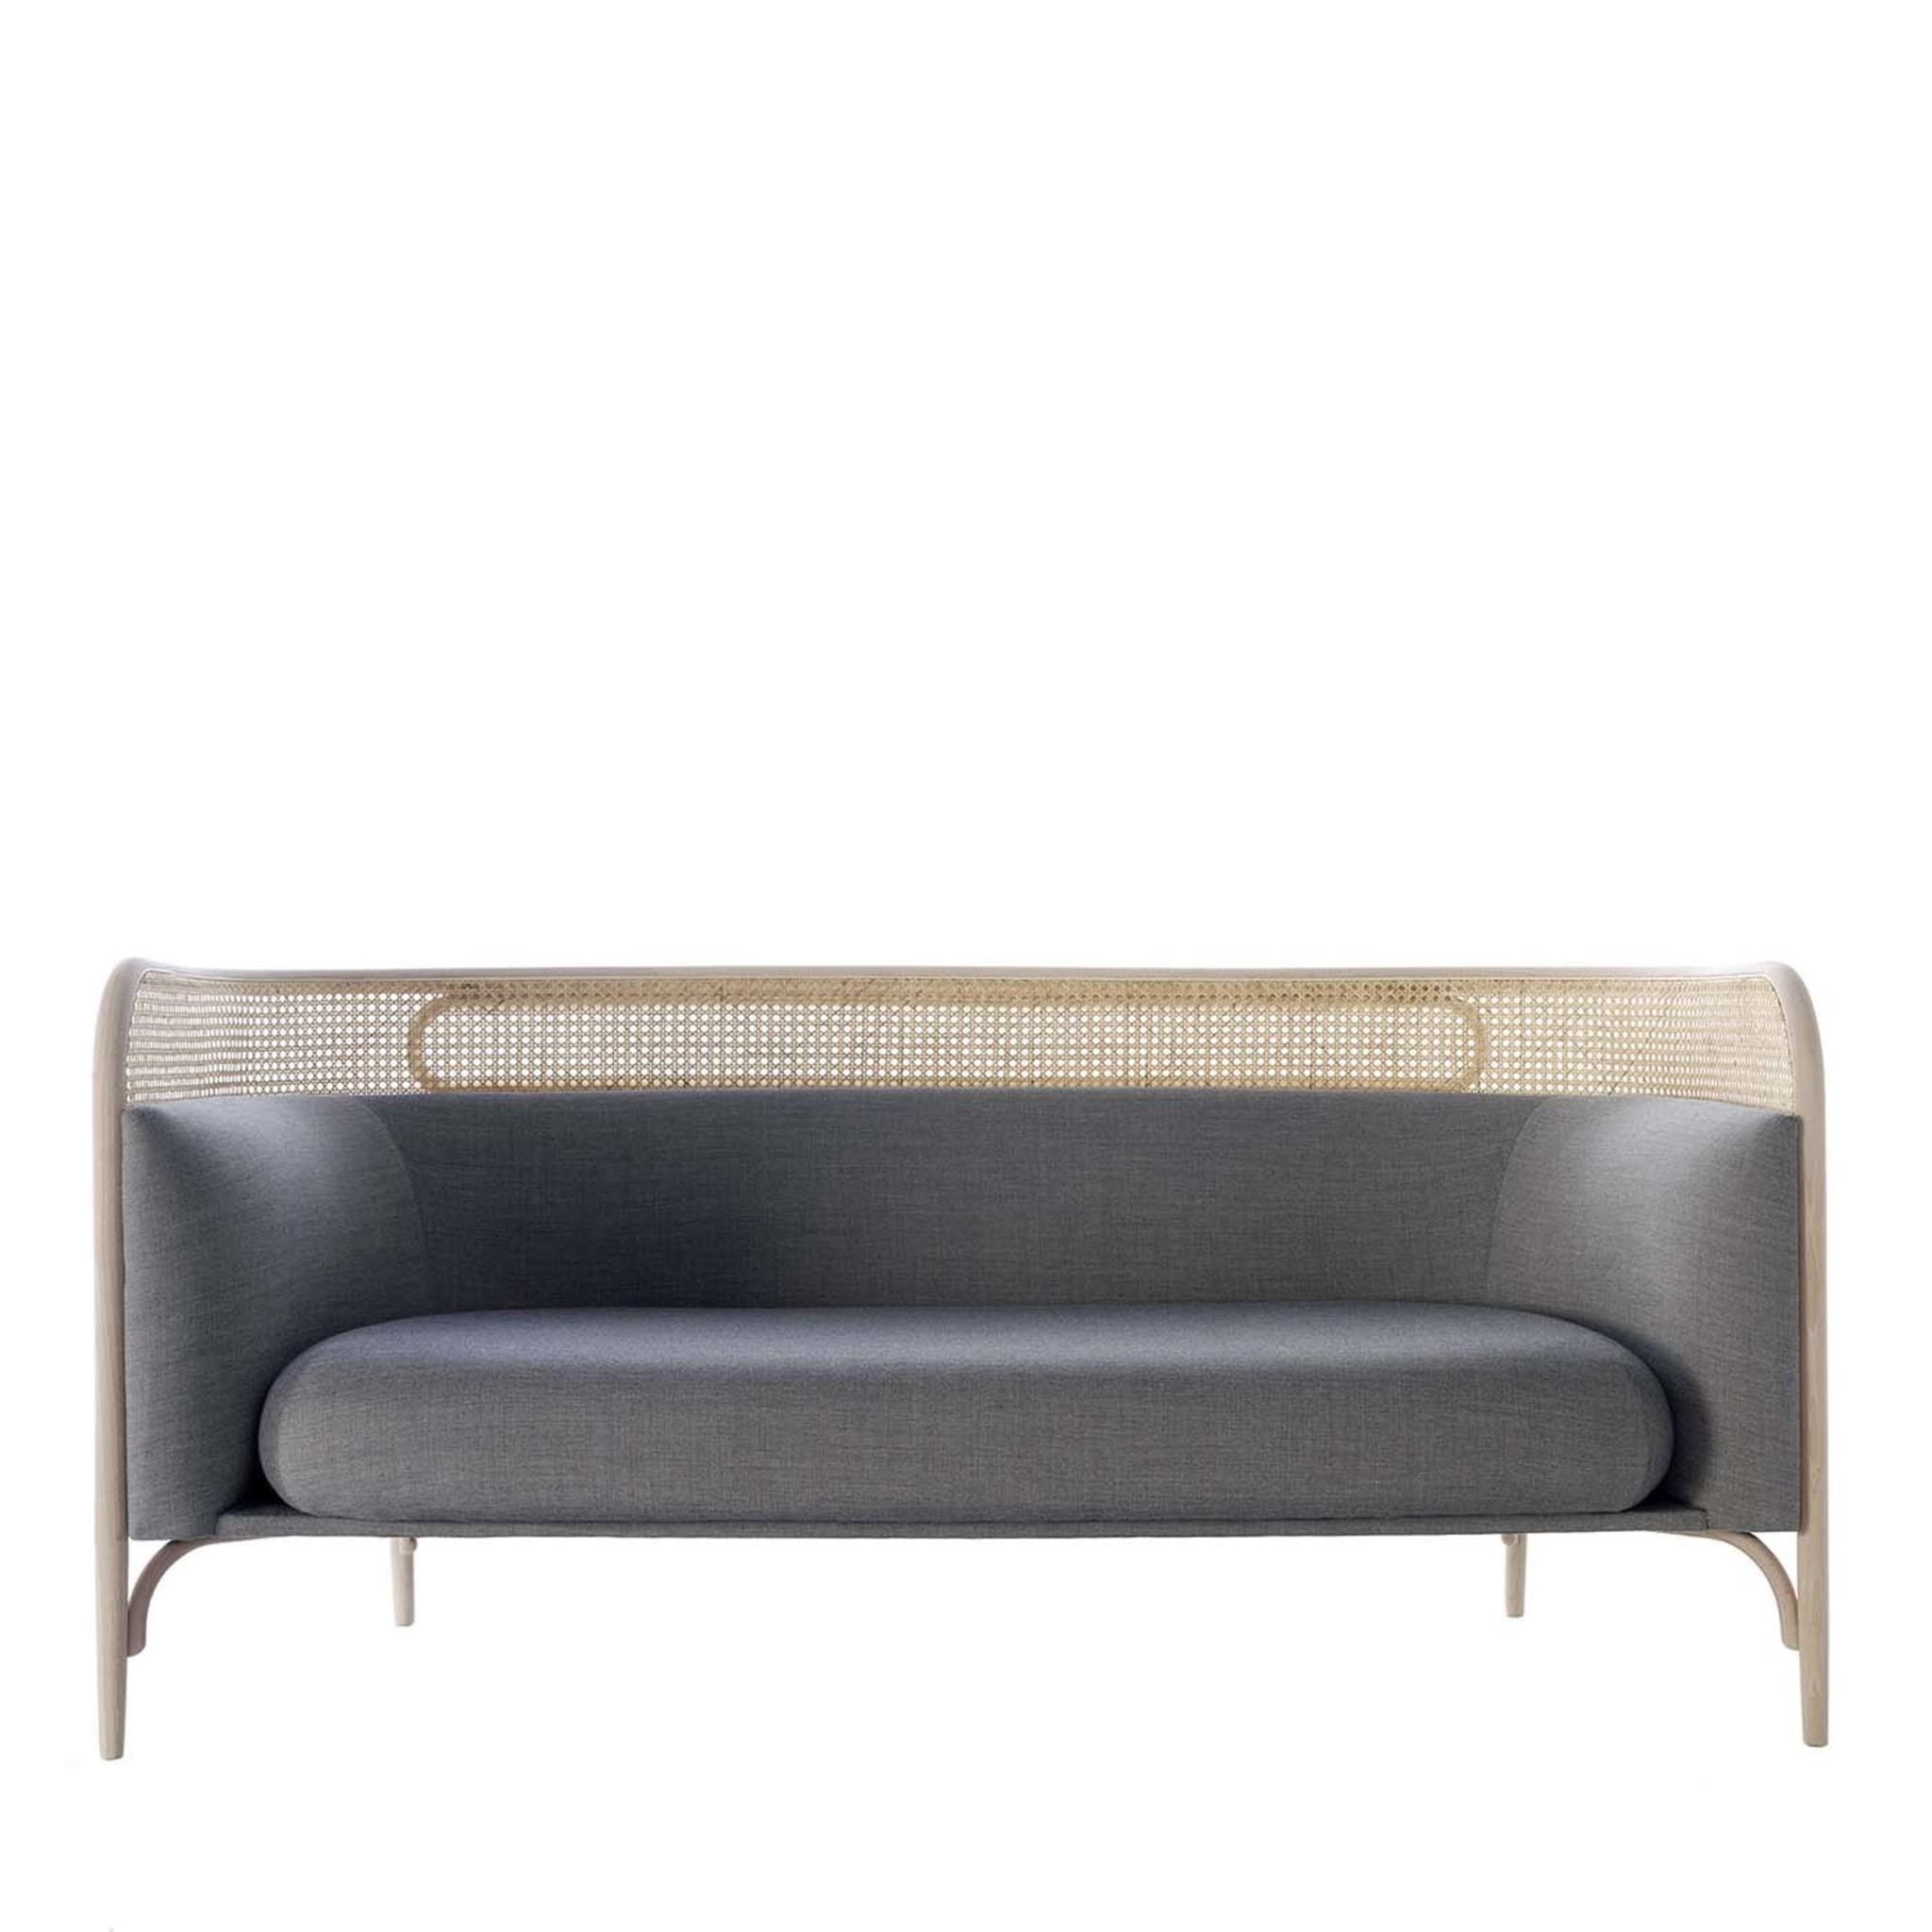 Targa 2-Seat Sofa in Dark Grey by GamFratesi - Main view